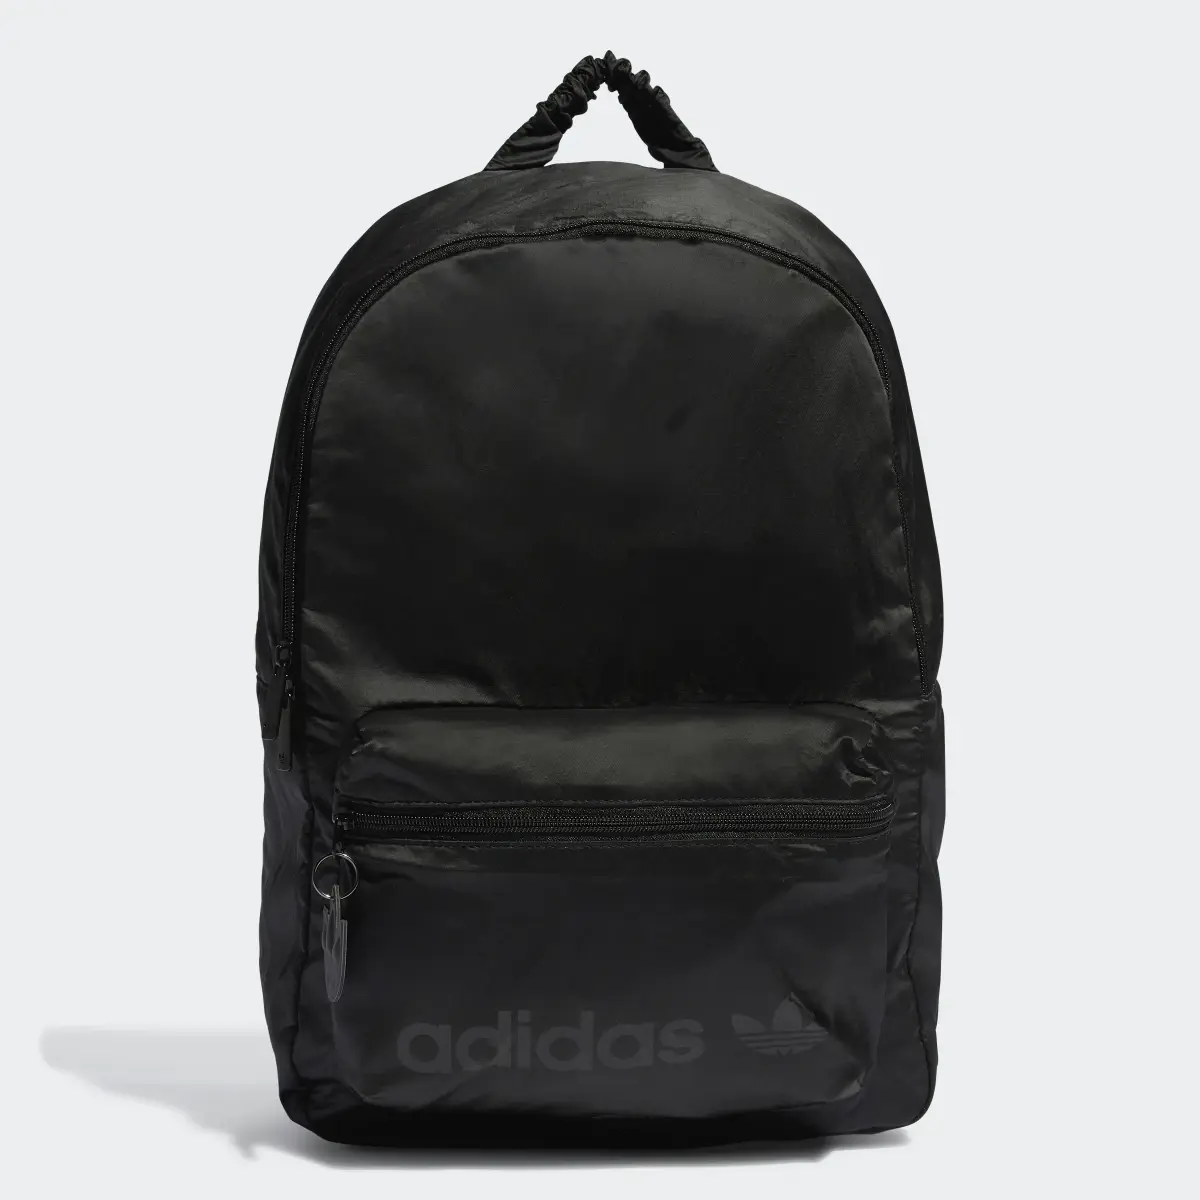 Adidas Satin Classic Backpack. 2